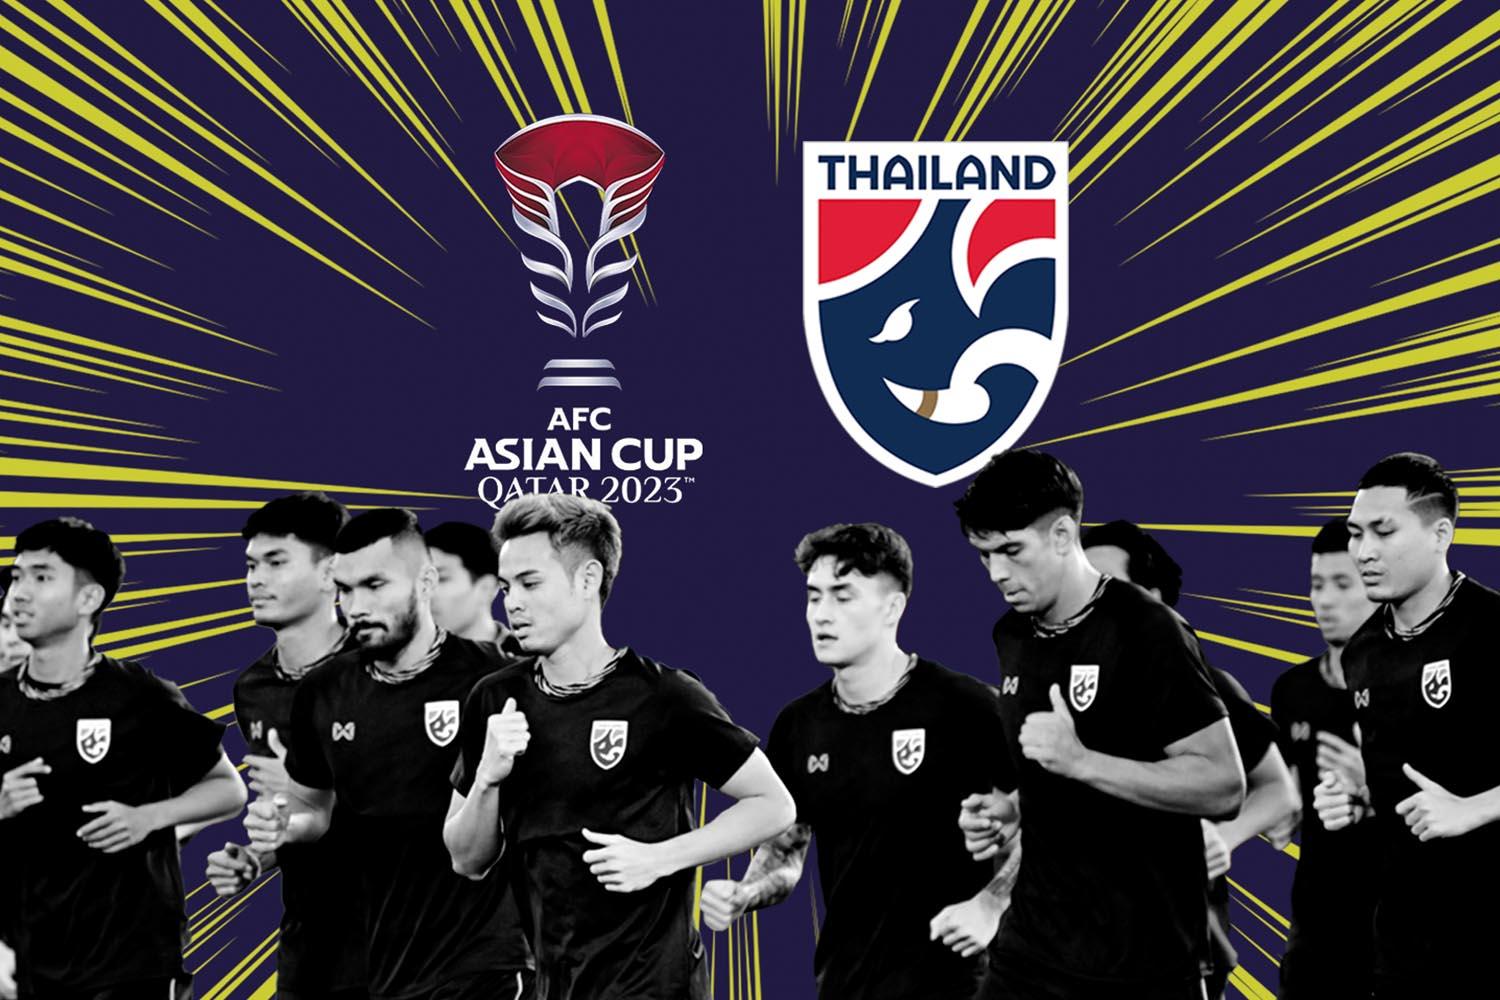 Asean-team-and-Thailand-in-Asian-cup-2023-SPACEBAR-Hero.jpg